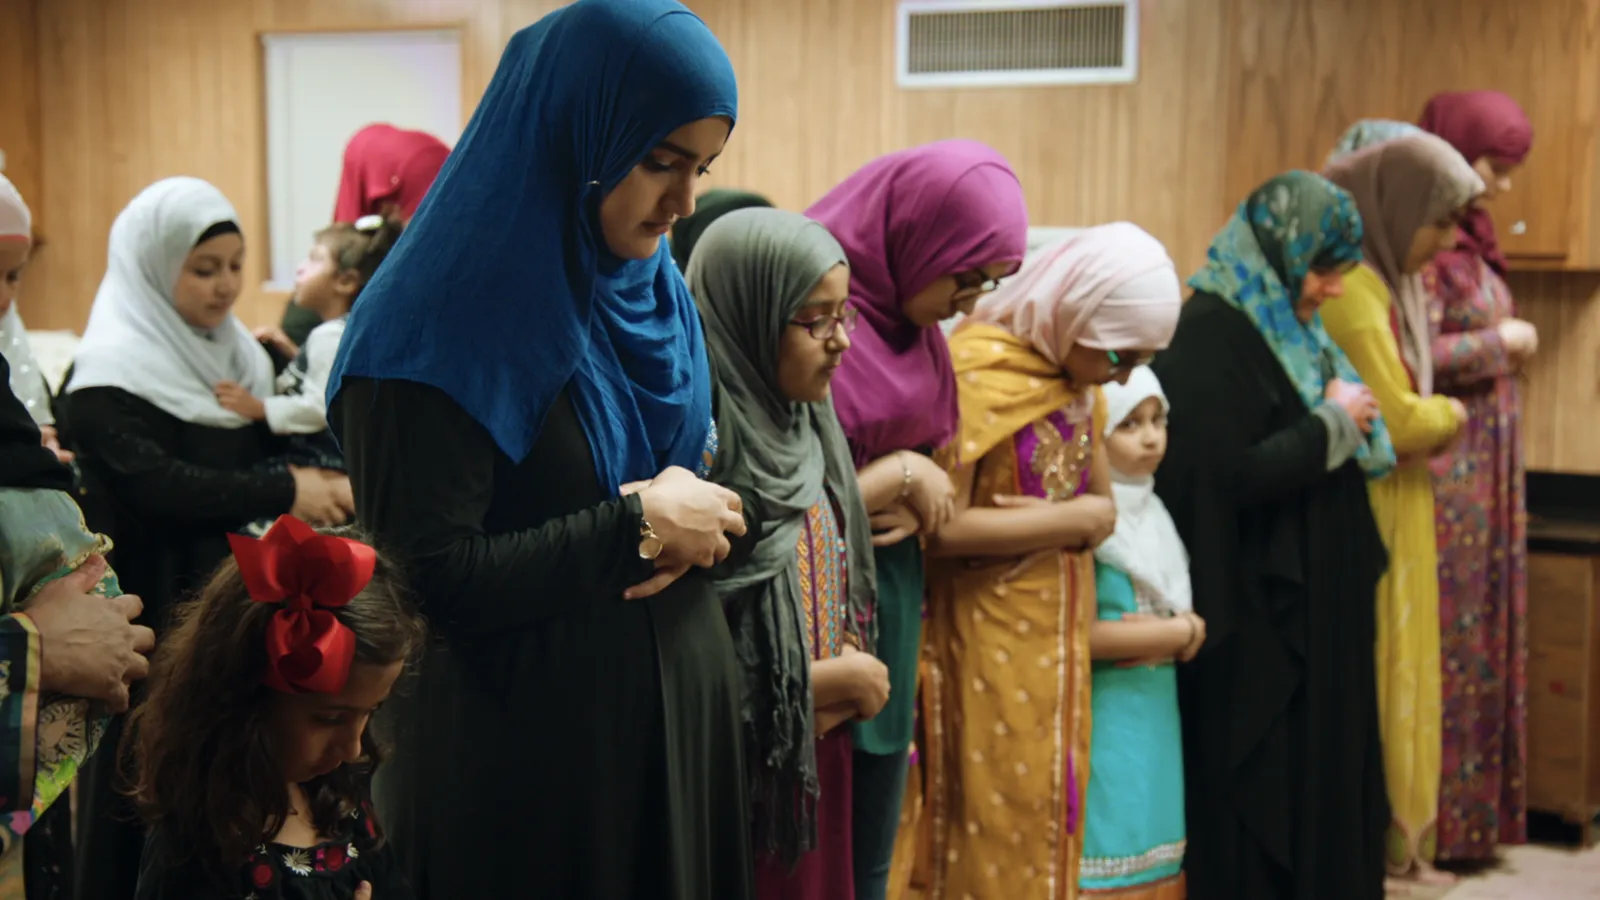 Veiled Women pray in the Victoria Islamic Center